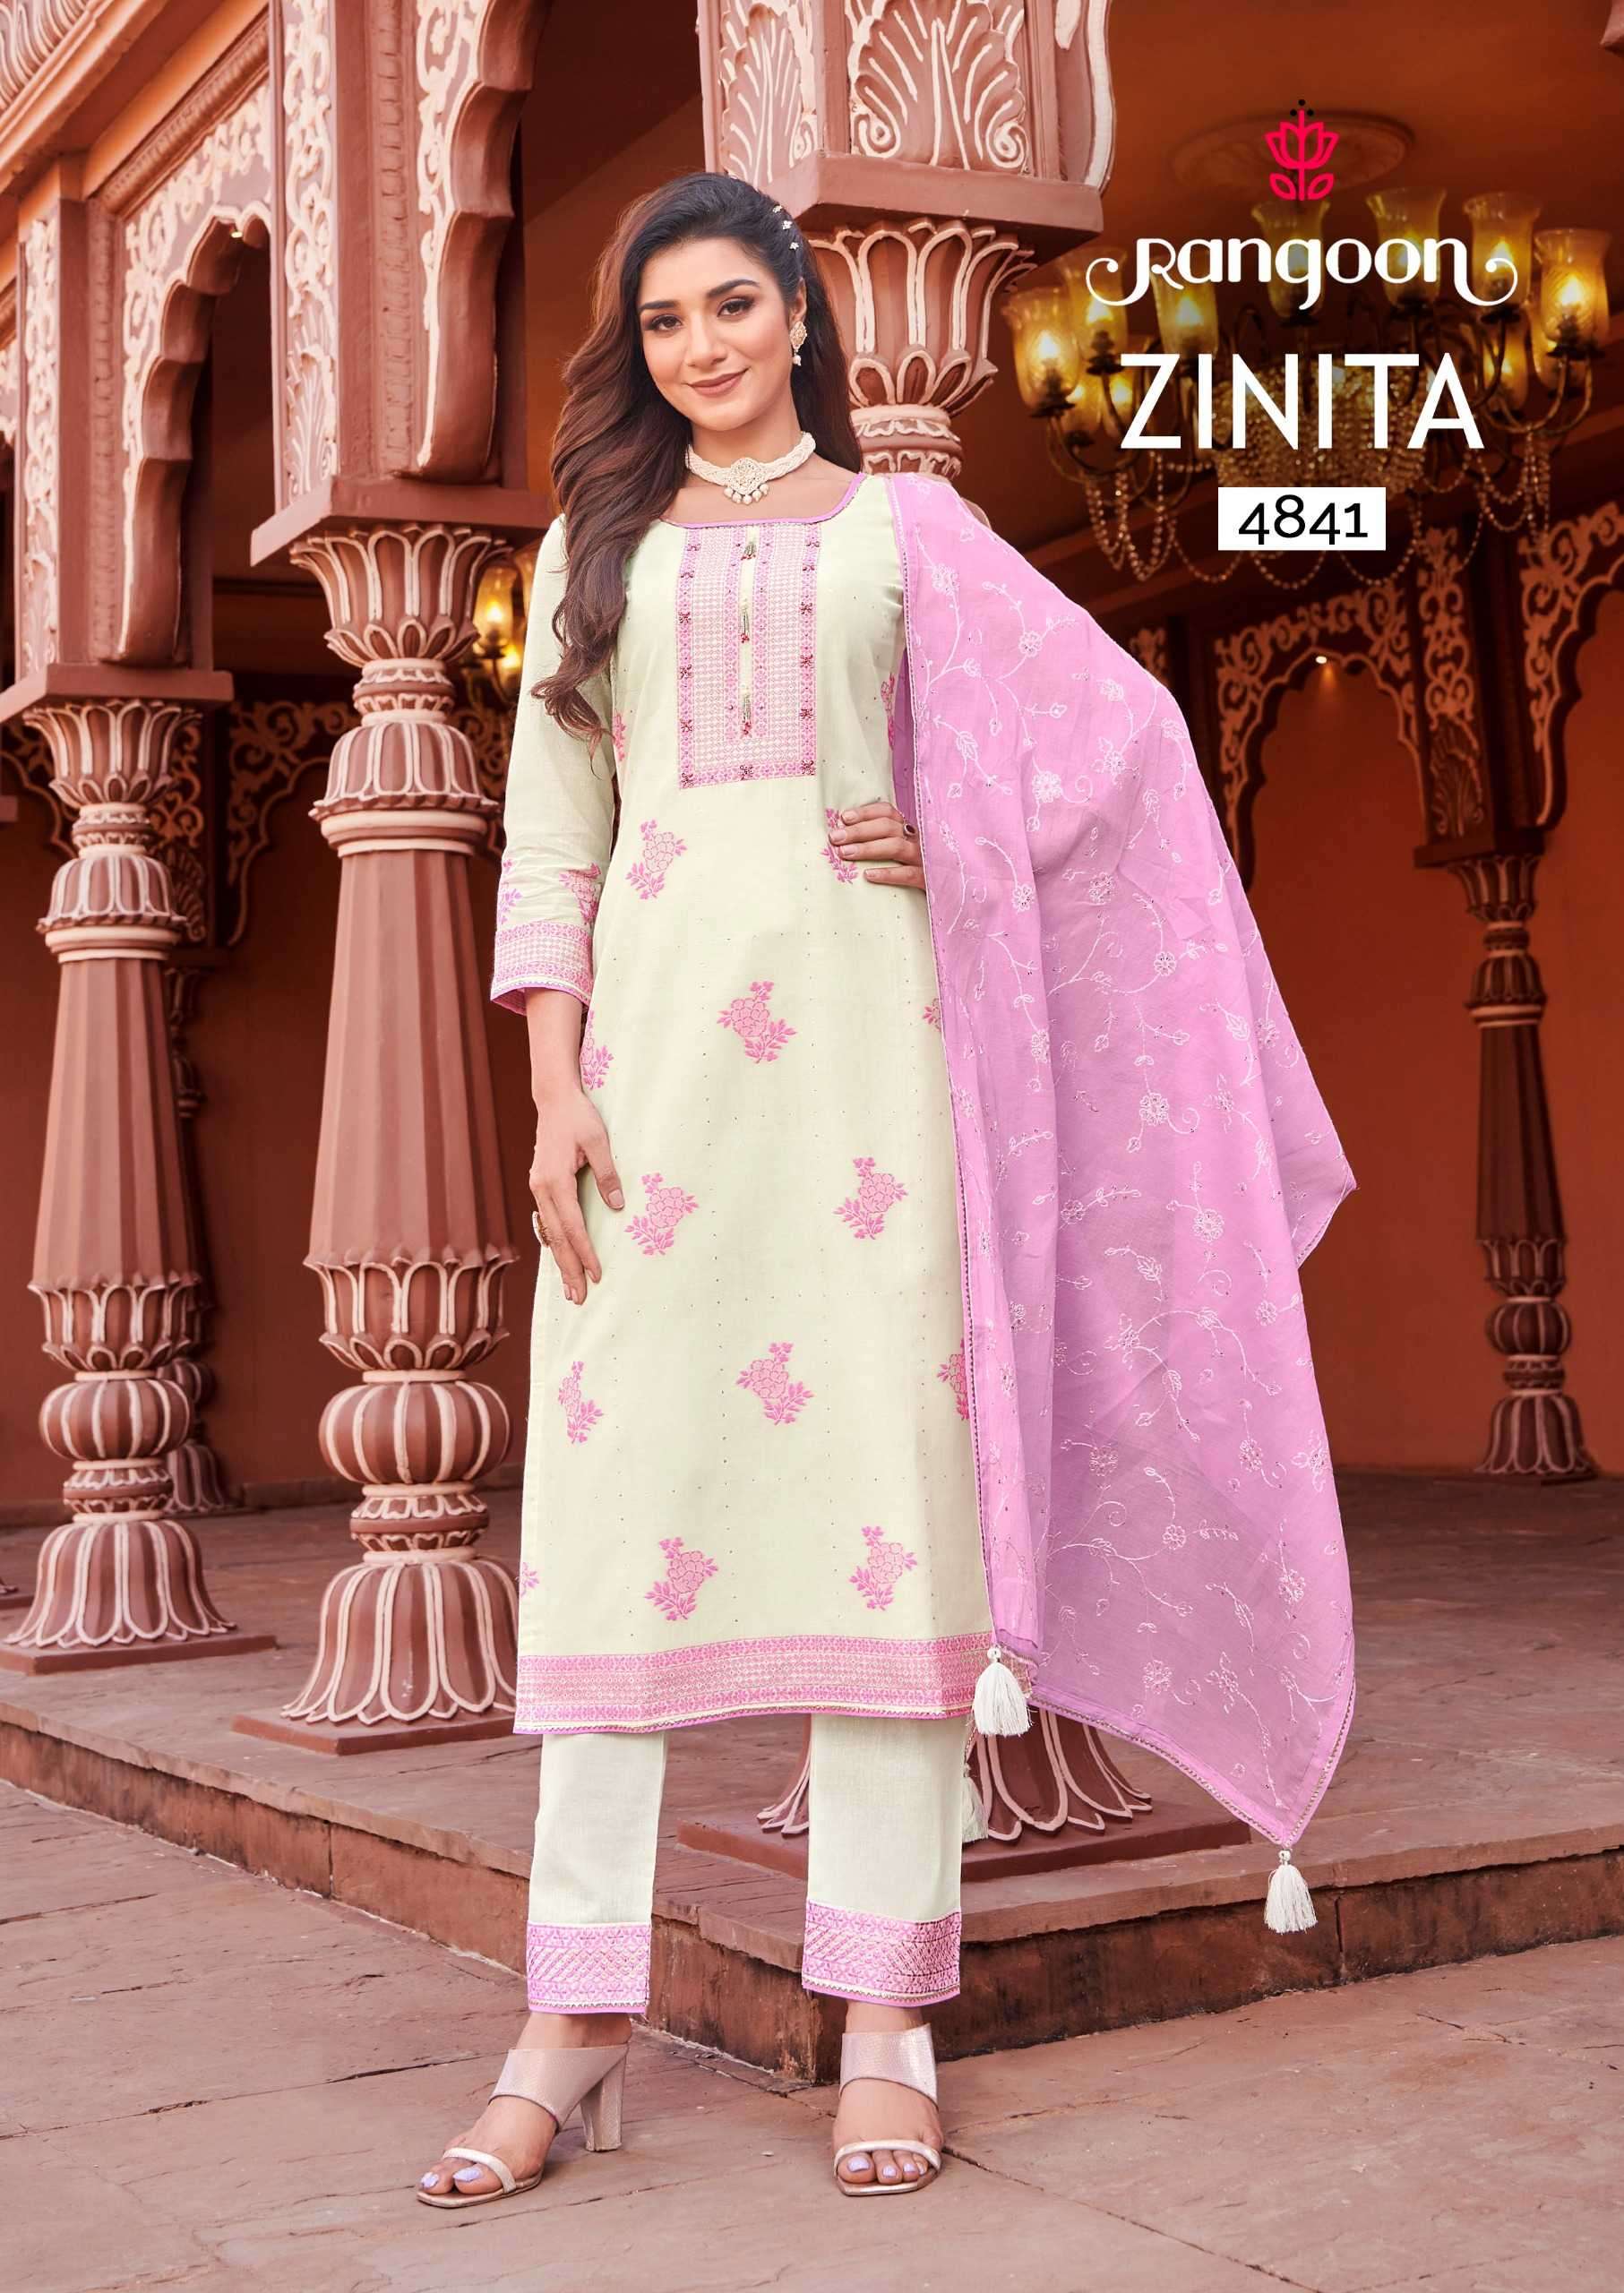 Rangoon presents zinita Pure Cotton kurtis with pant and dupatta collection 